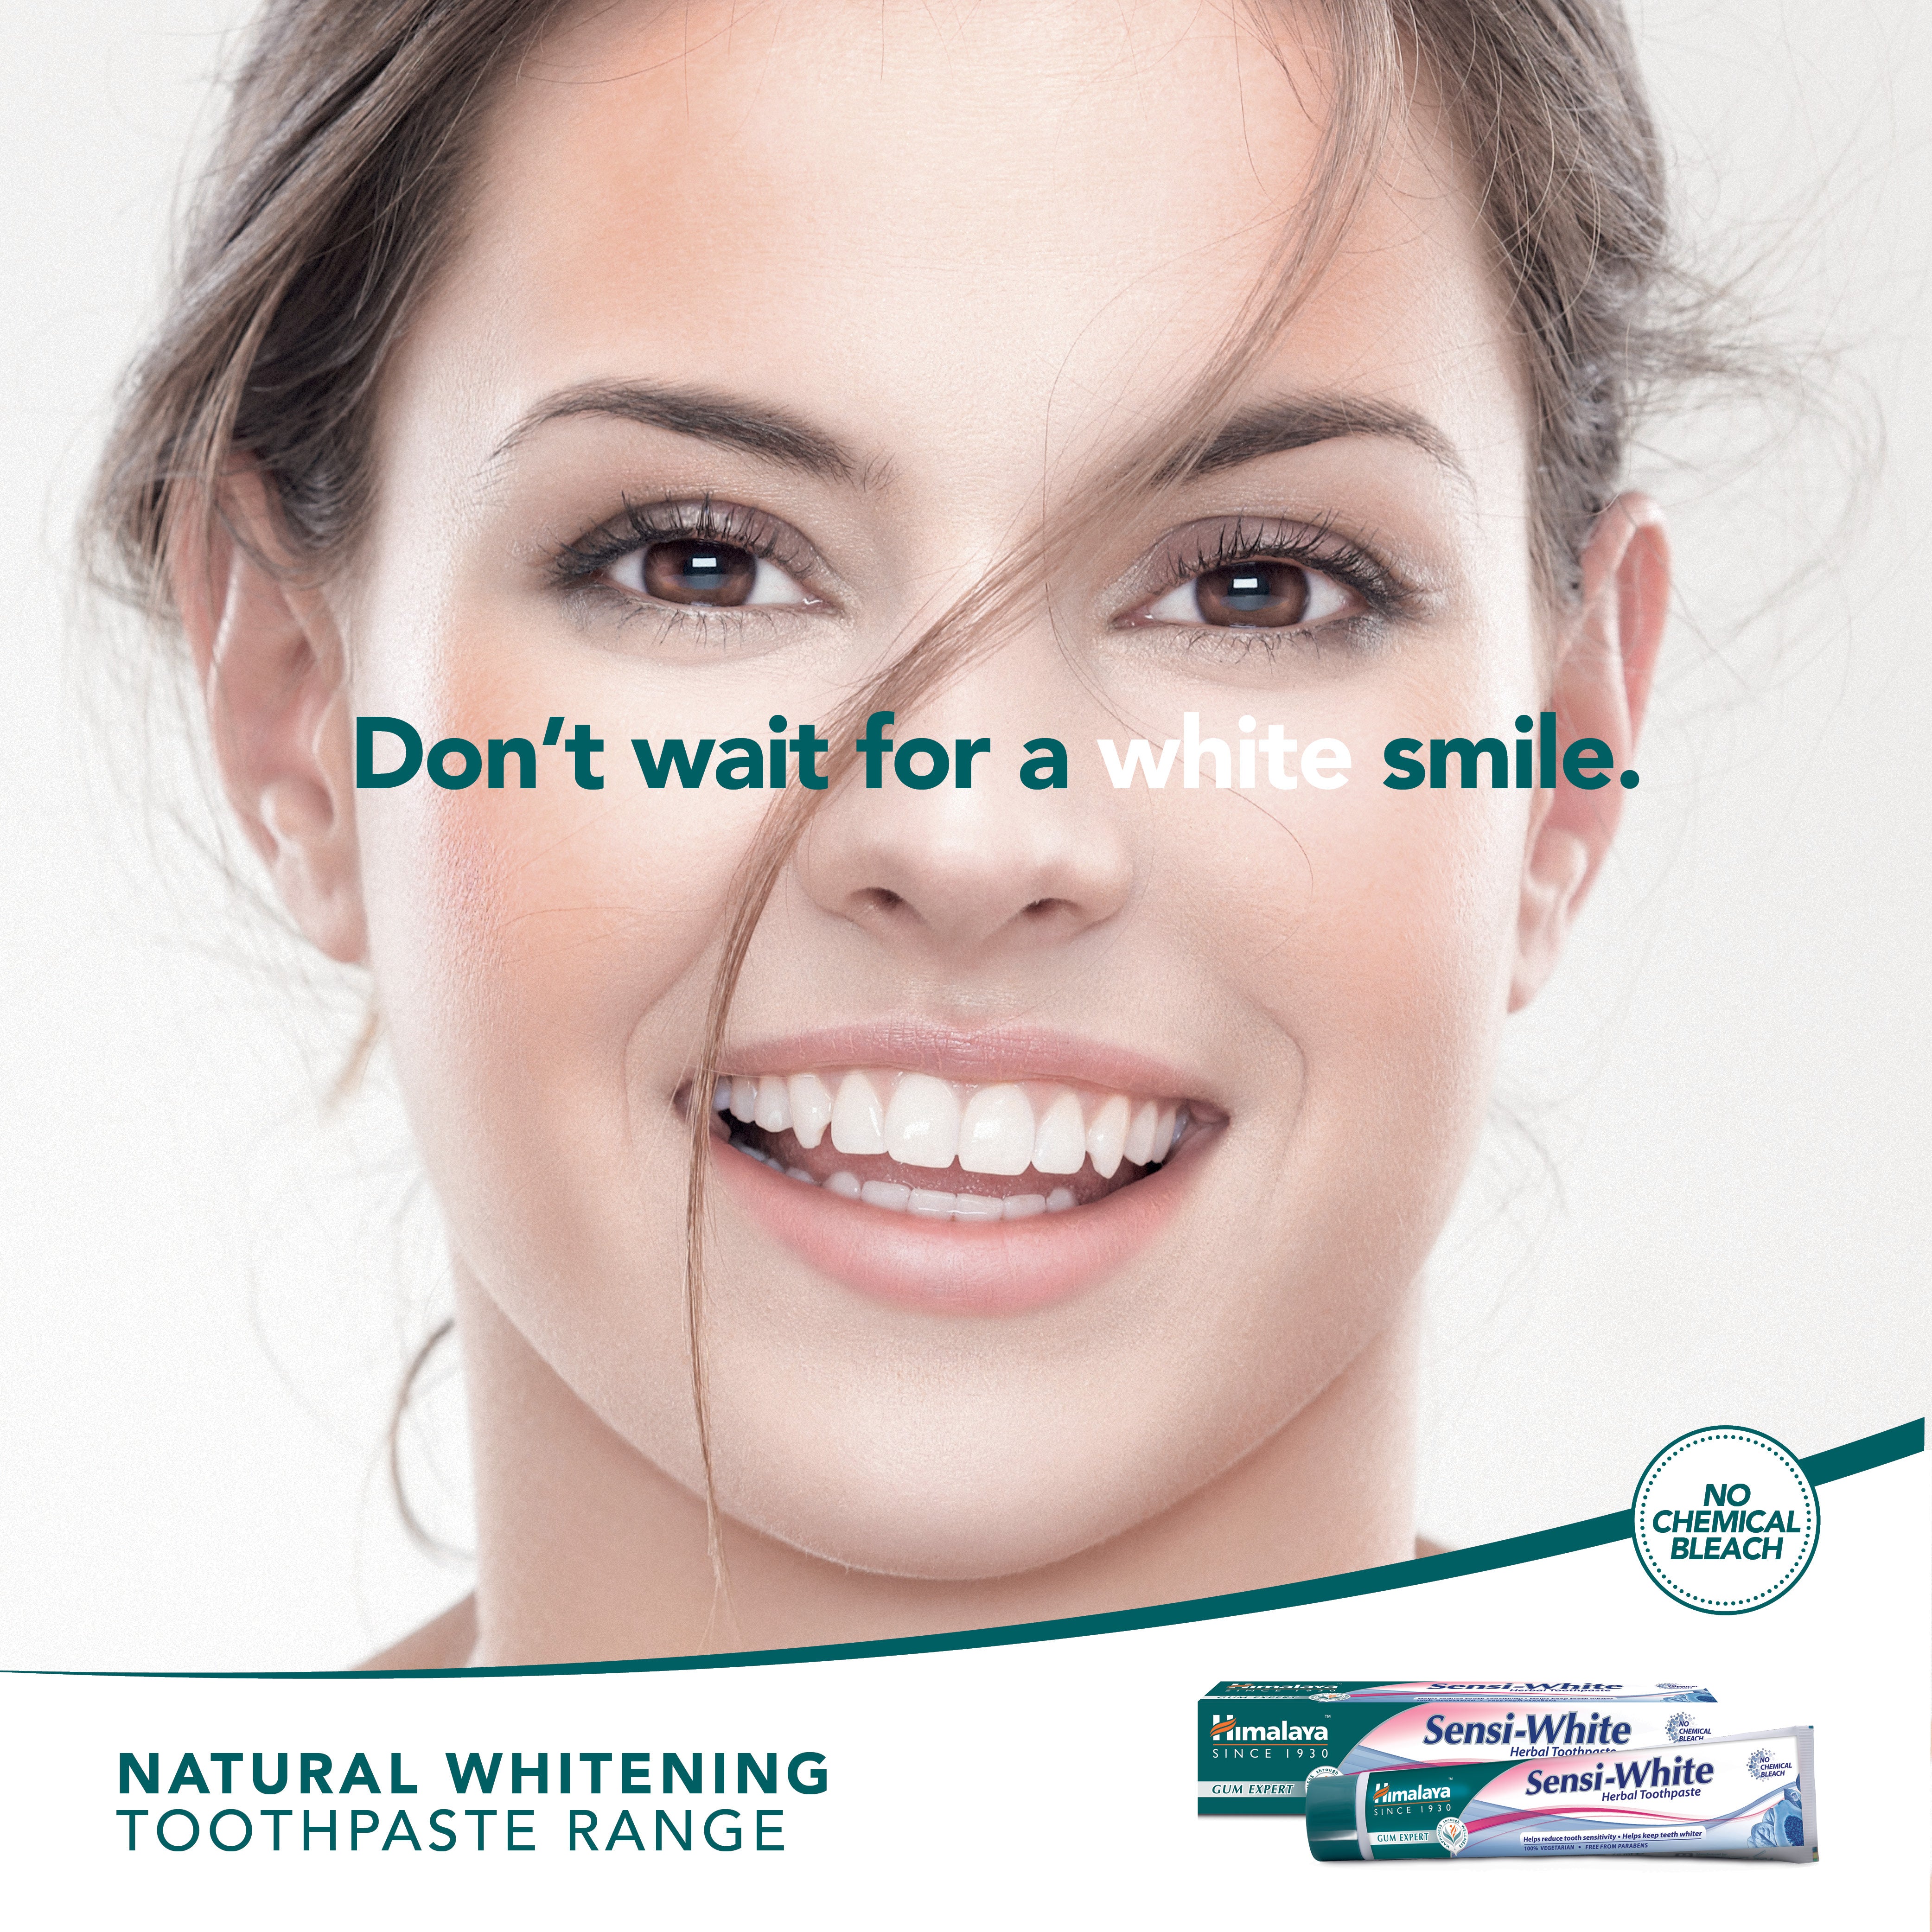 Himalaya Gum Expert Herbal Toothpaste - Sensi White - 75ml (Pack of 2)